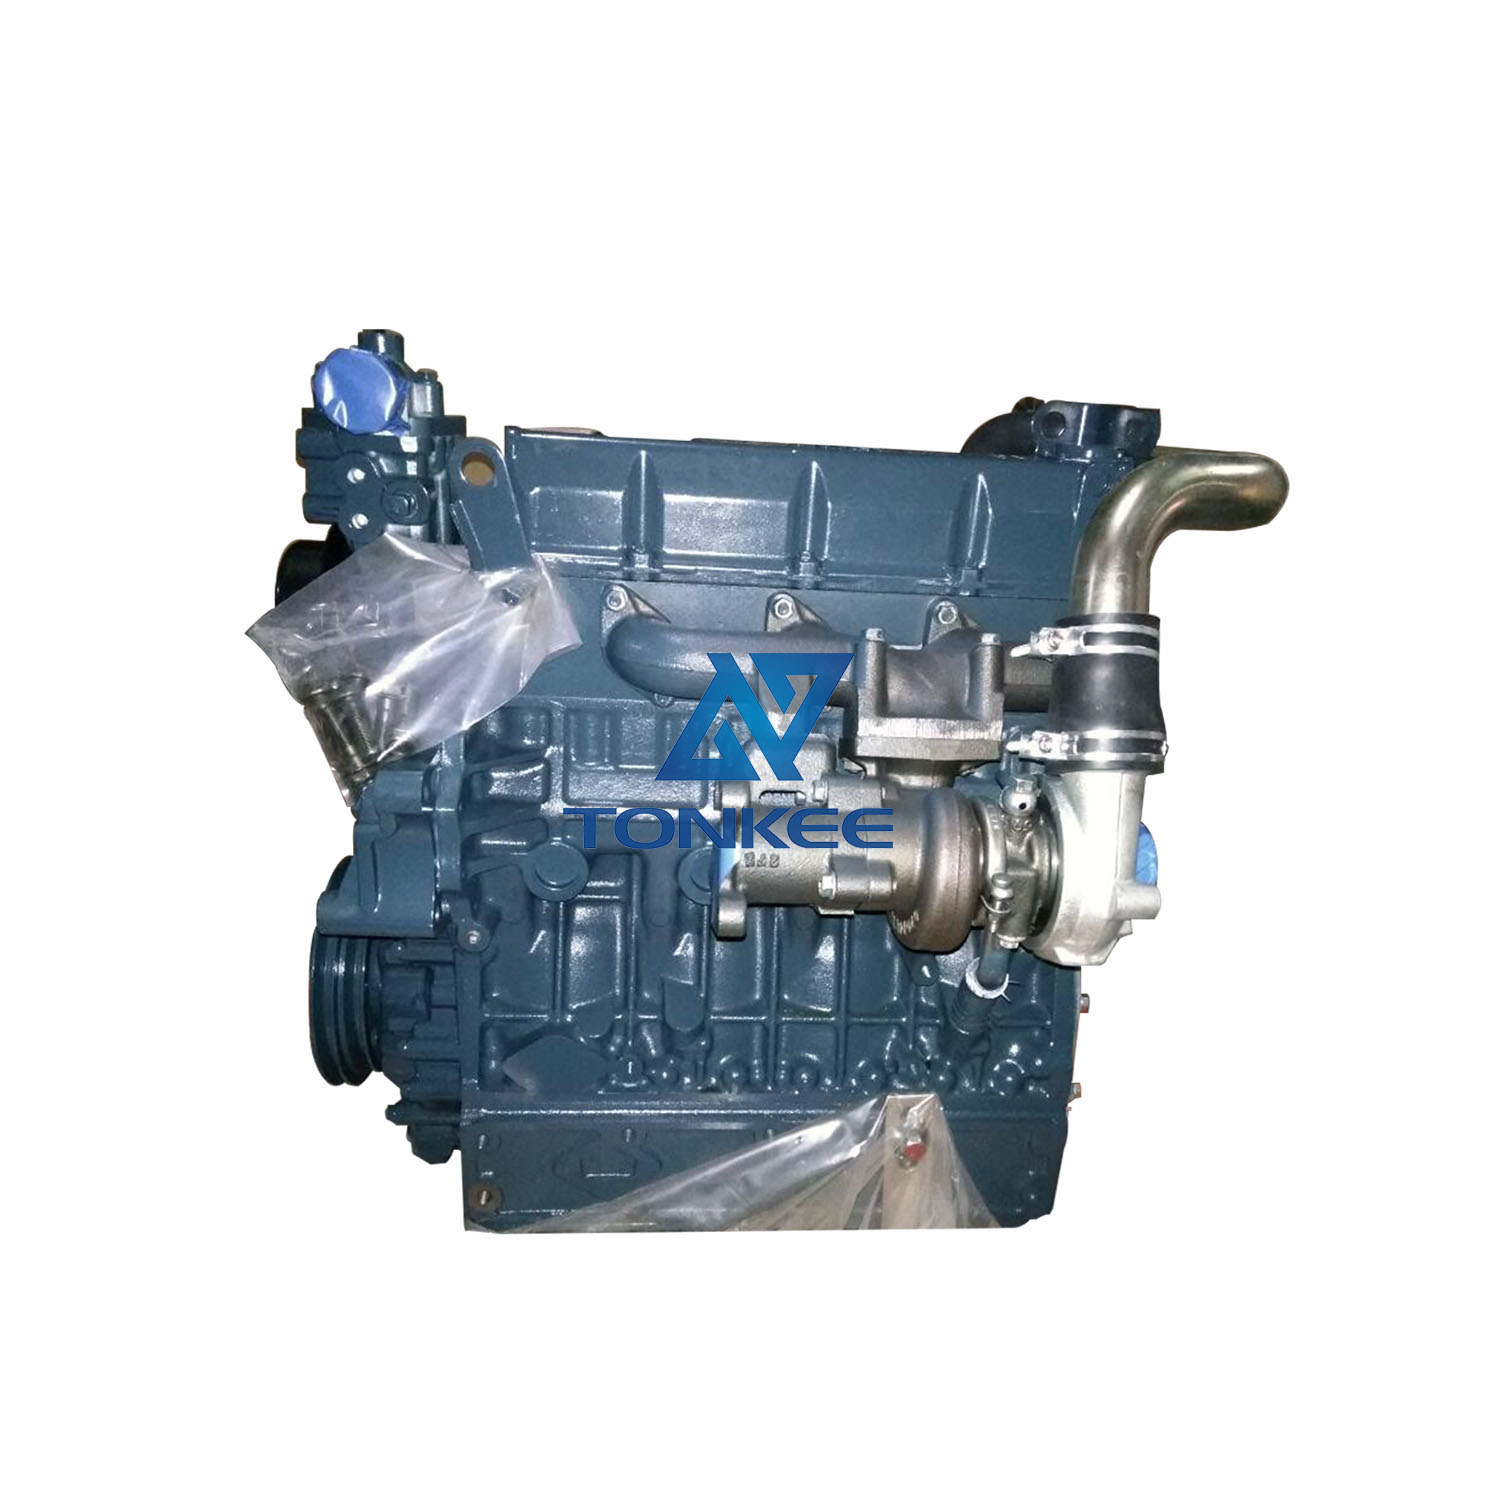 6684577 V3300DI-T-E2CB-BOB1 diesel engine assembly V3300DI V3300 tire 2 S250 S330 skid loader diesel engine assy suitable for BOBCAT KUBOTA